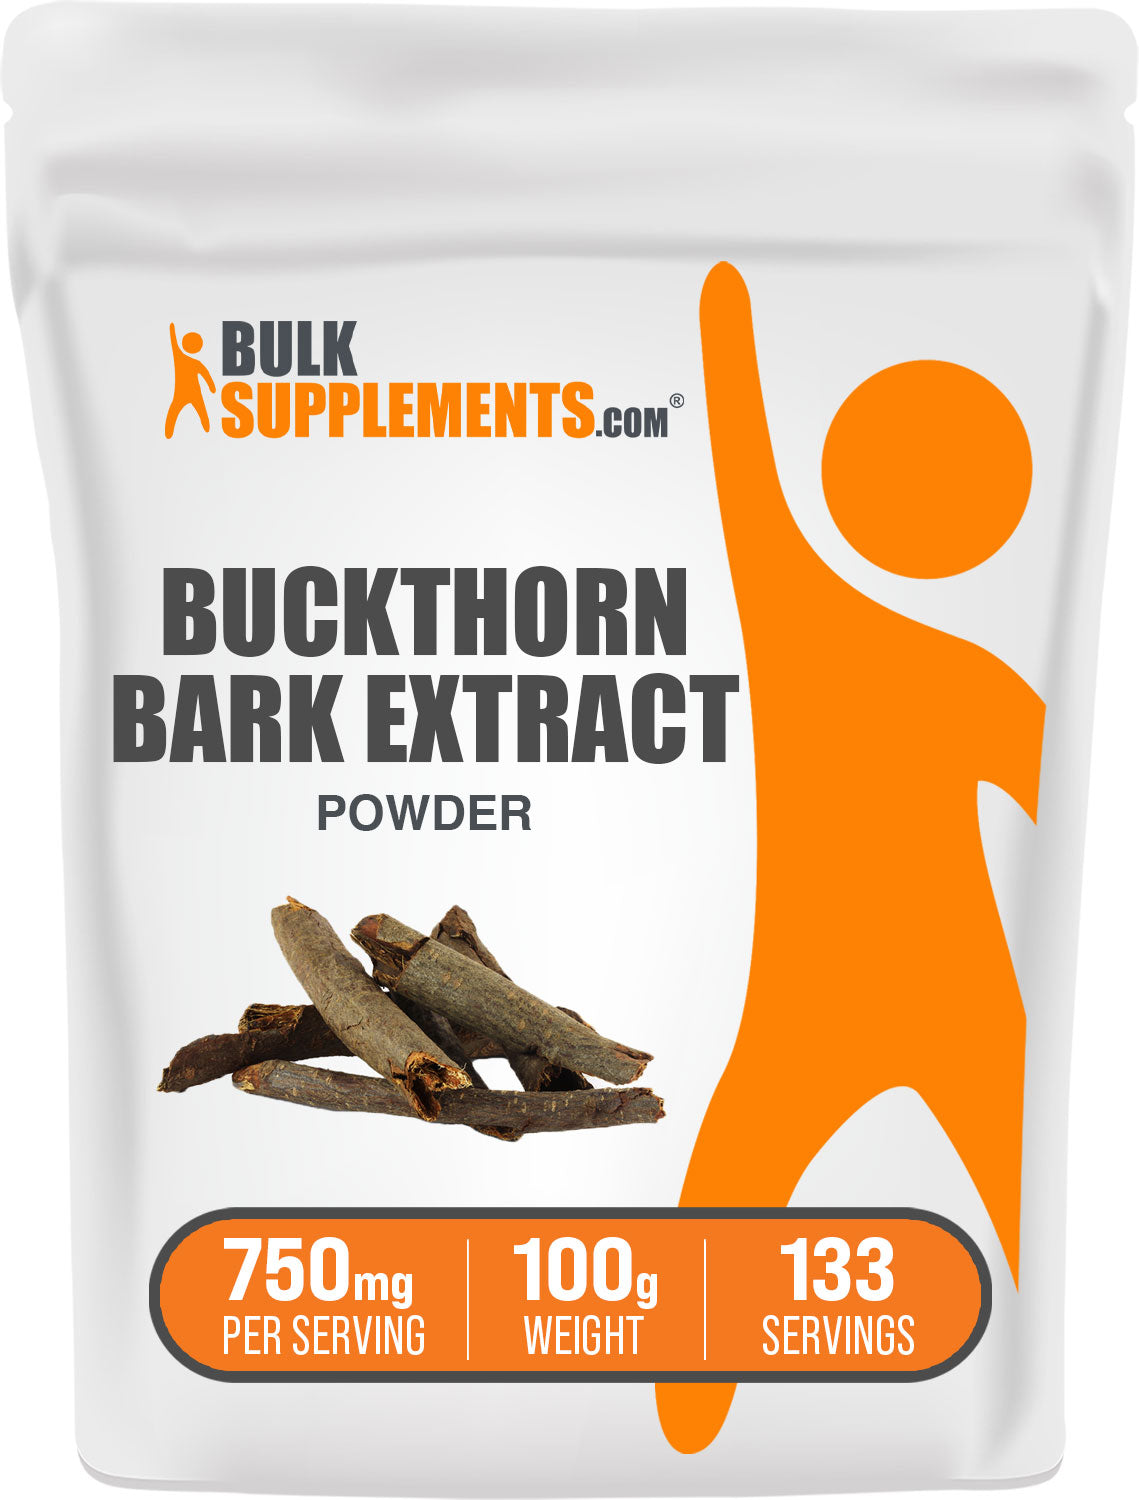 100g of Buckthorn Bark Extract